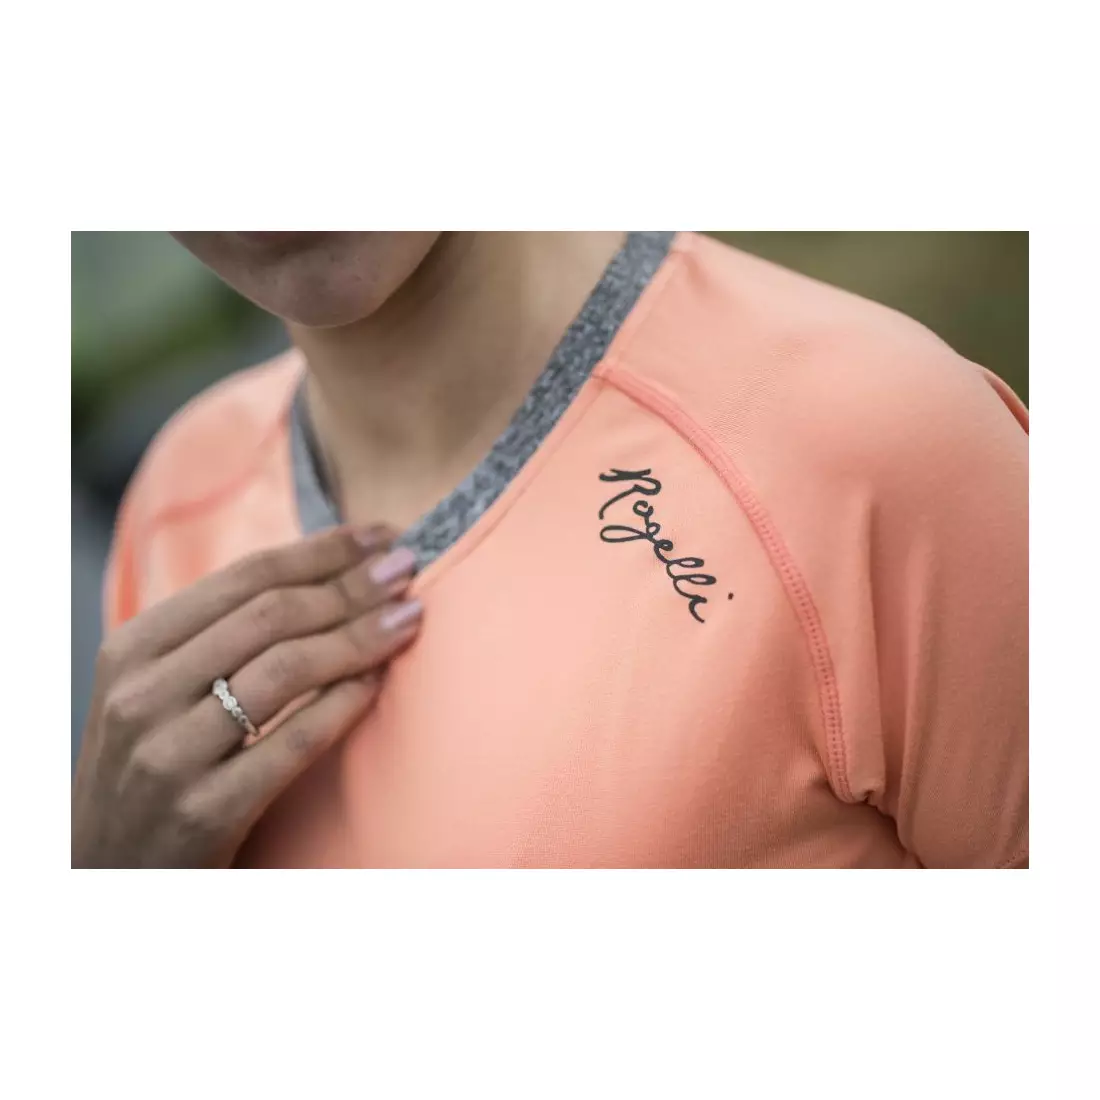 ROGELLI ROSA Women's sports T-shirt 050.402, color: gray